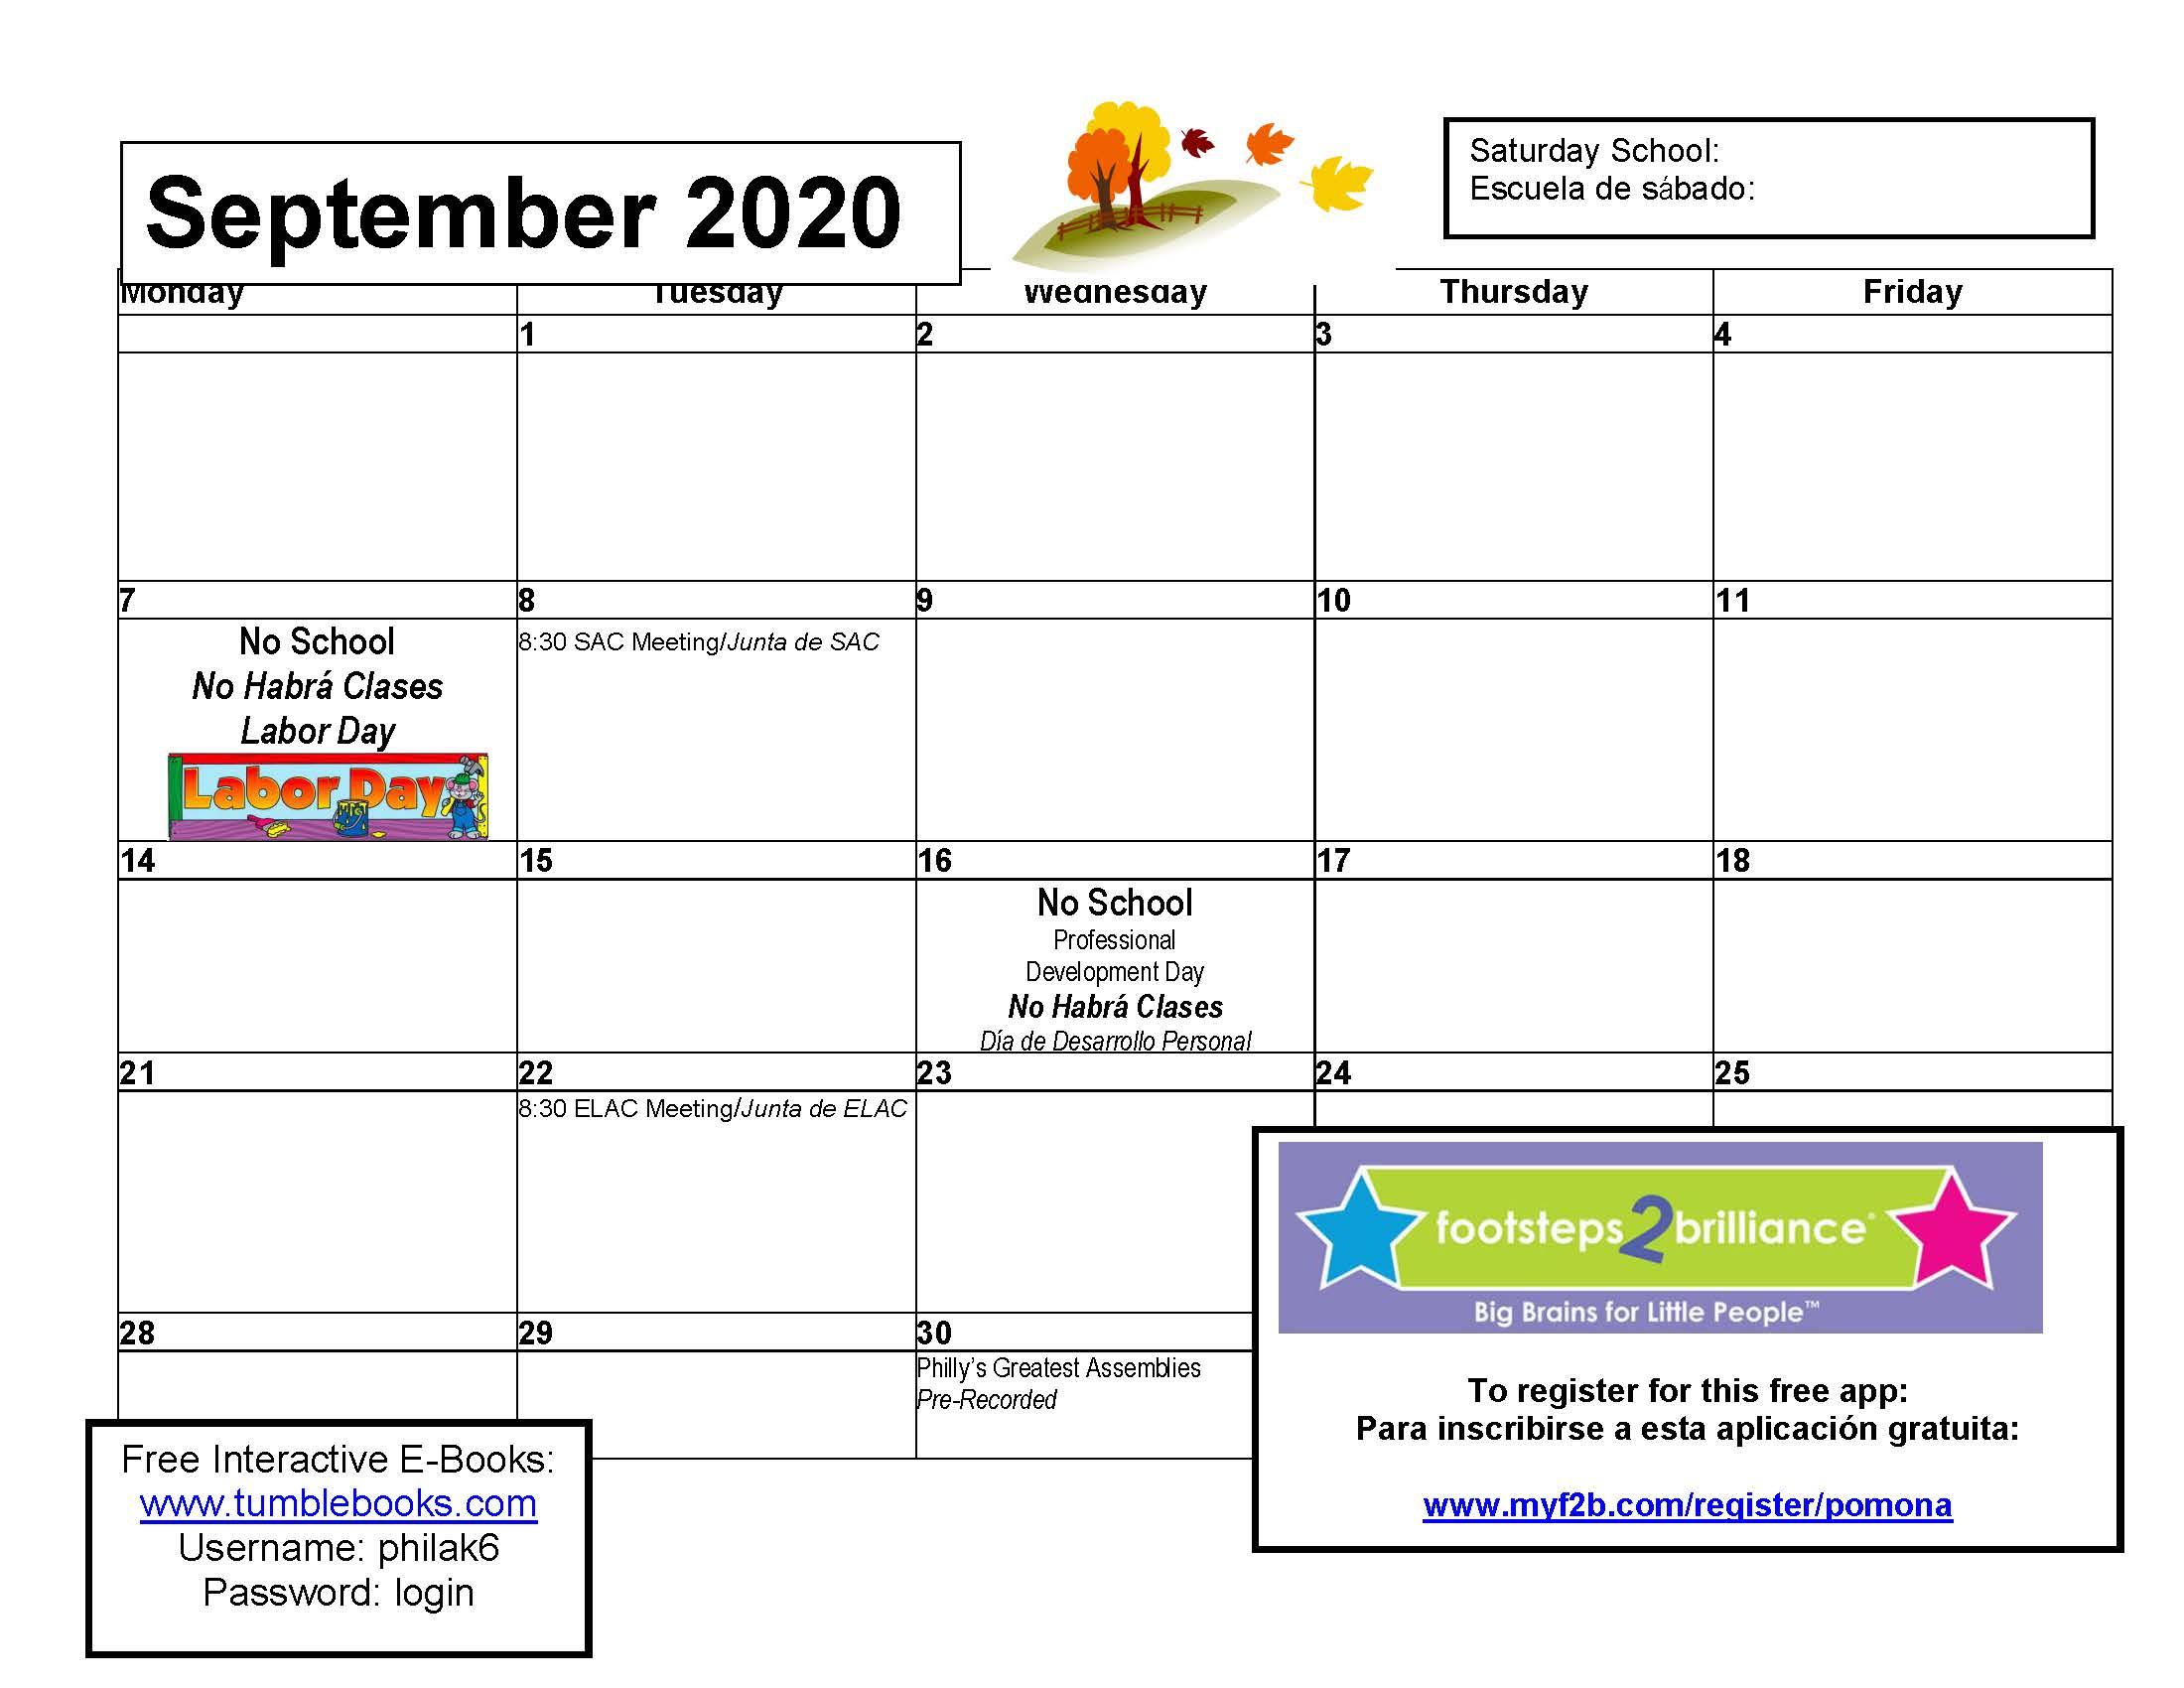 Please preview September calendar